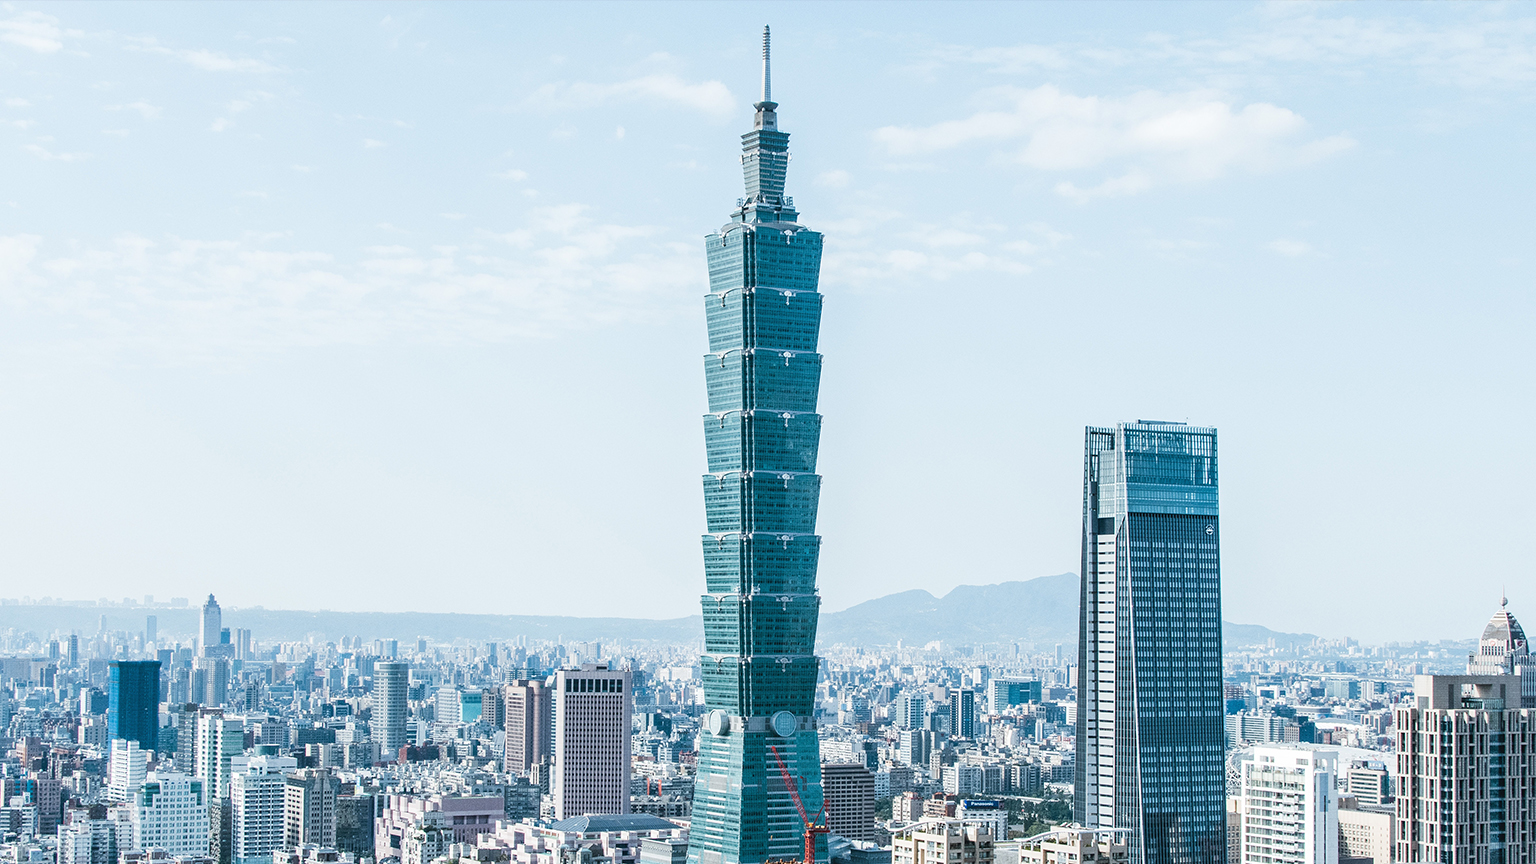 Taipei skyline image by Remi Yuan on Unsplash